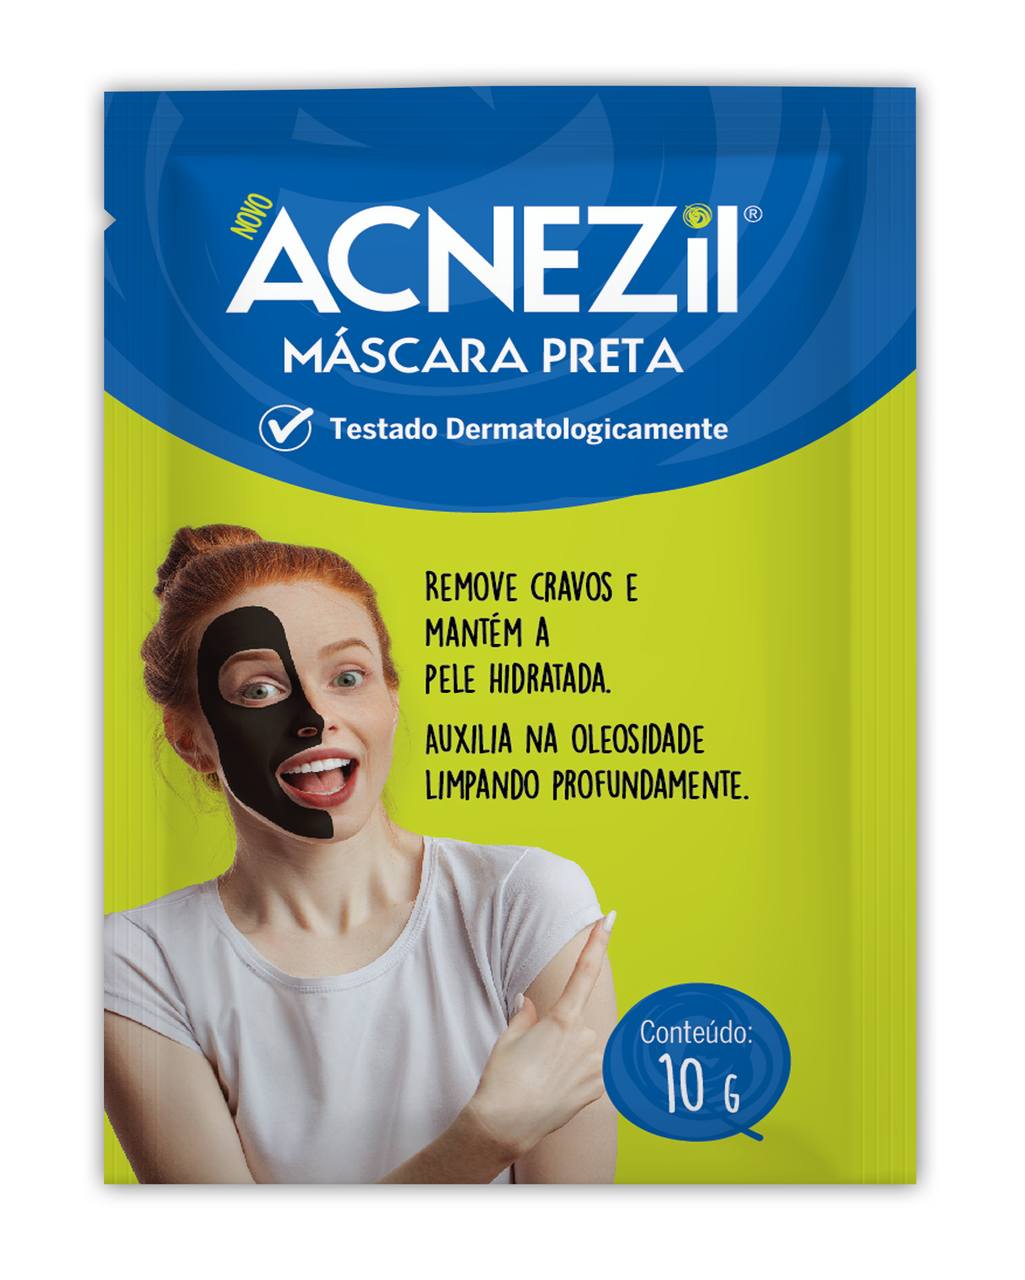 Imagem de embalagem de Acnezil Máscara para Cravos